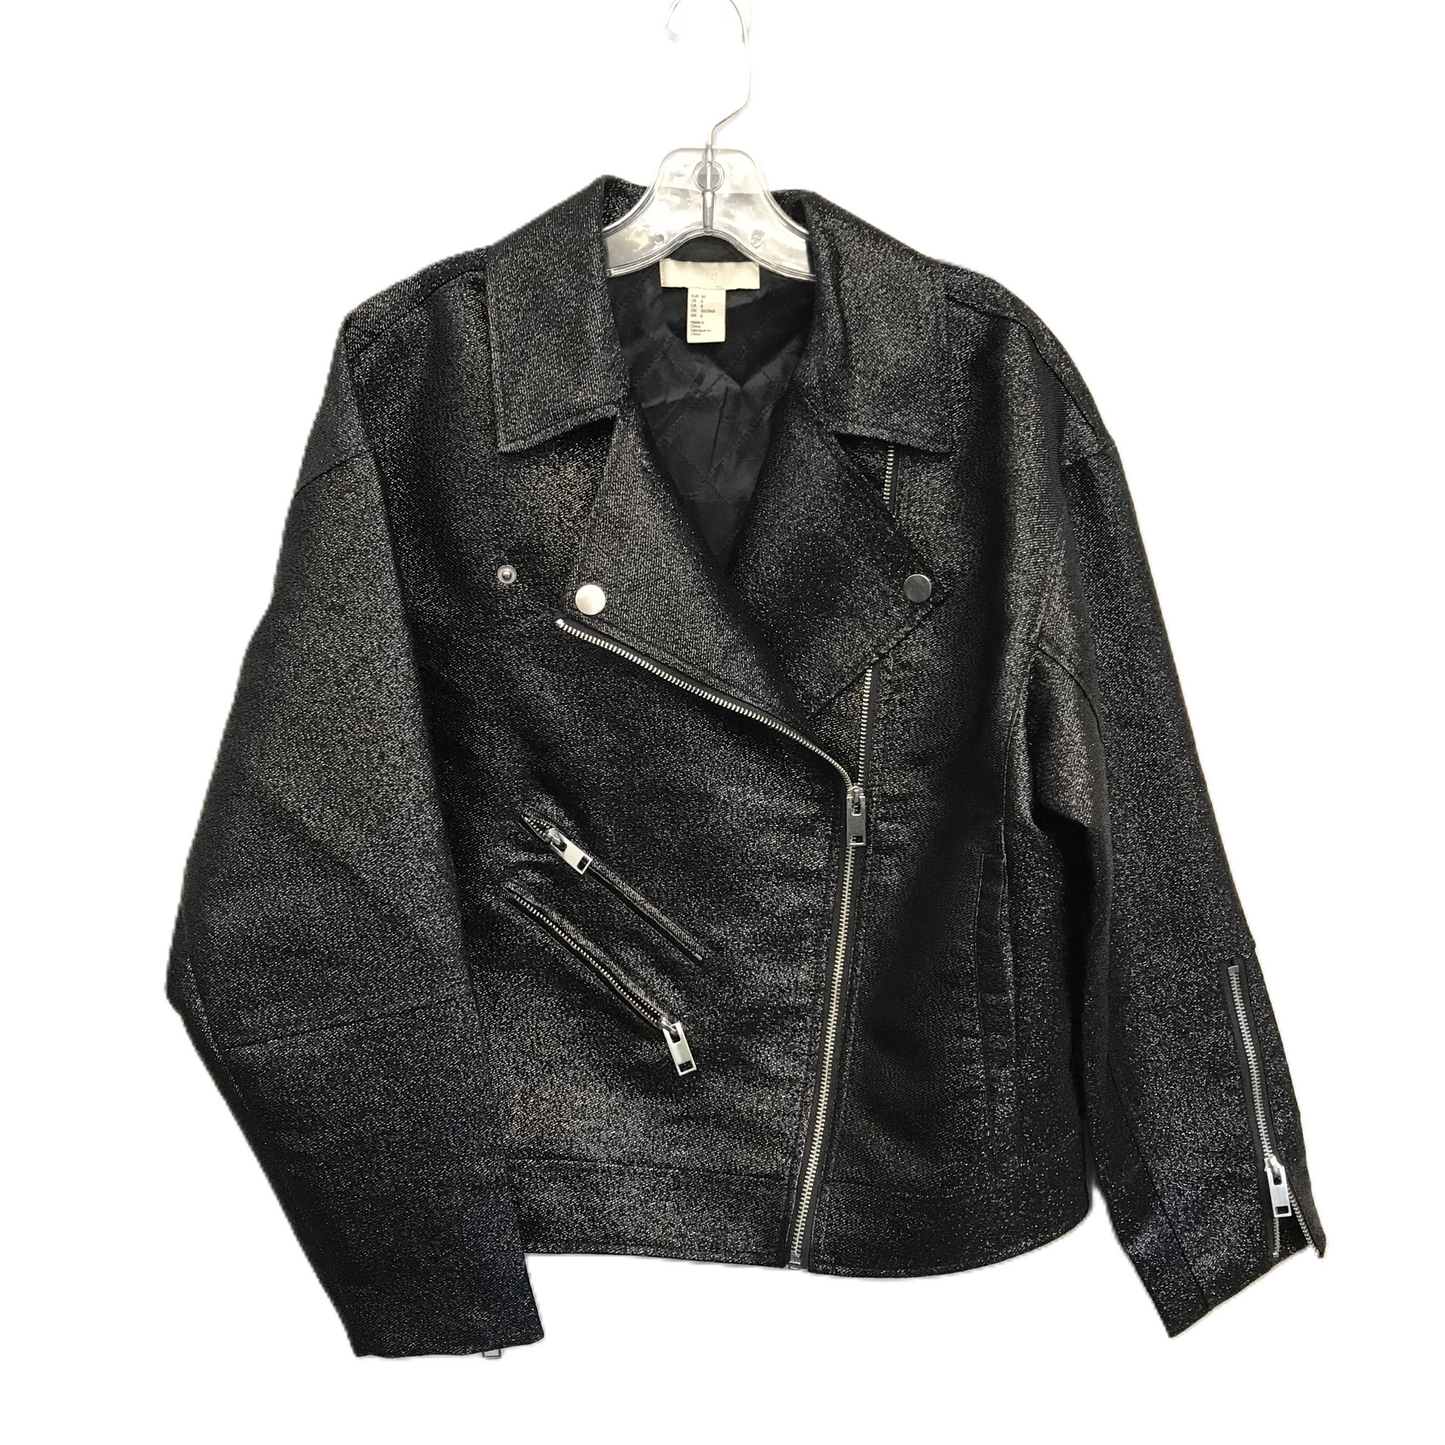 Black Jacket Moto By H&m, Size: S